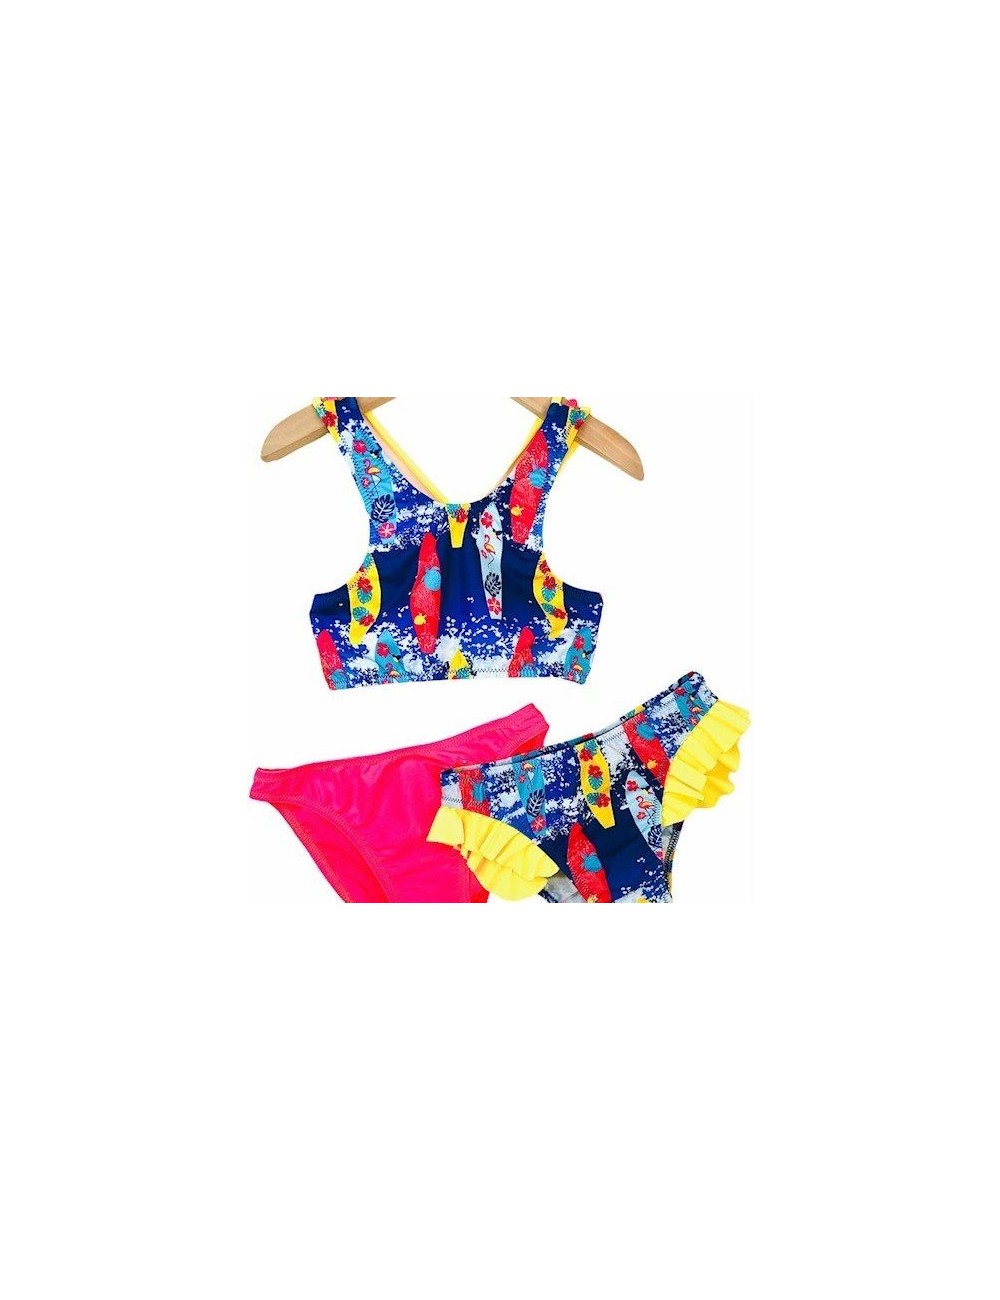 Tortue Παιδικό / Εφηβικό Μαγιό Bikini με 2 Slip S1-042-123 Lamoda.gr